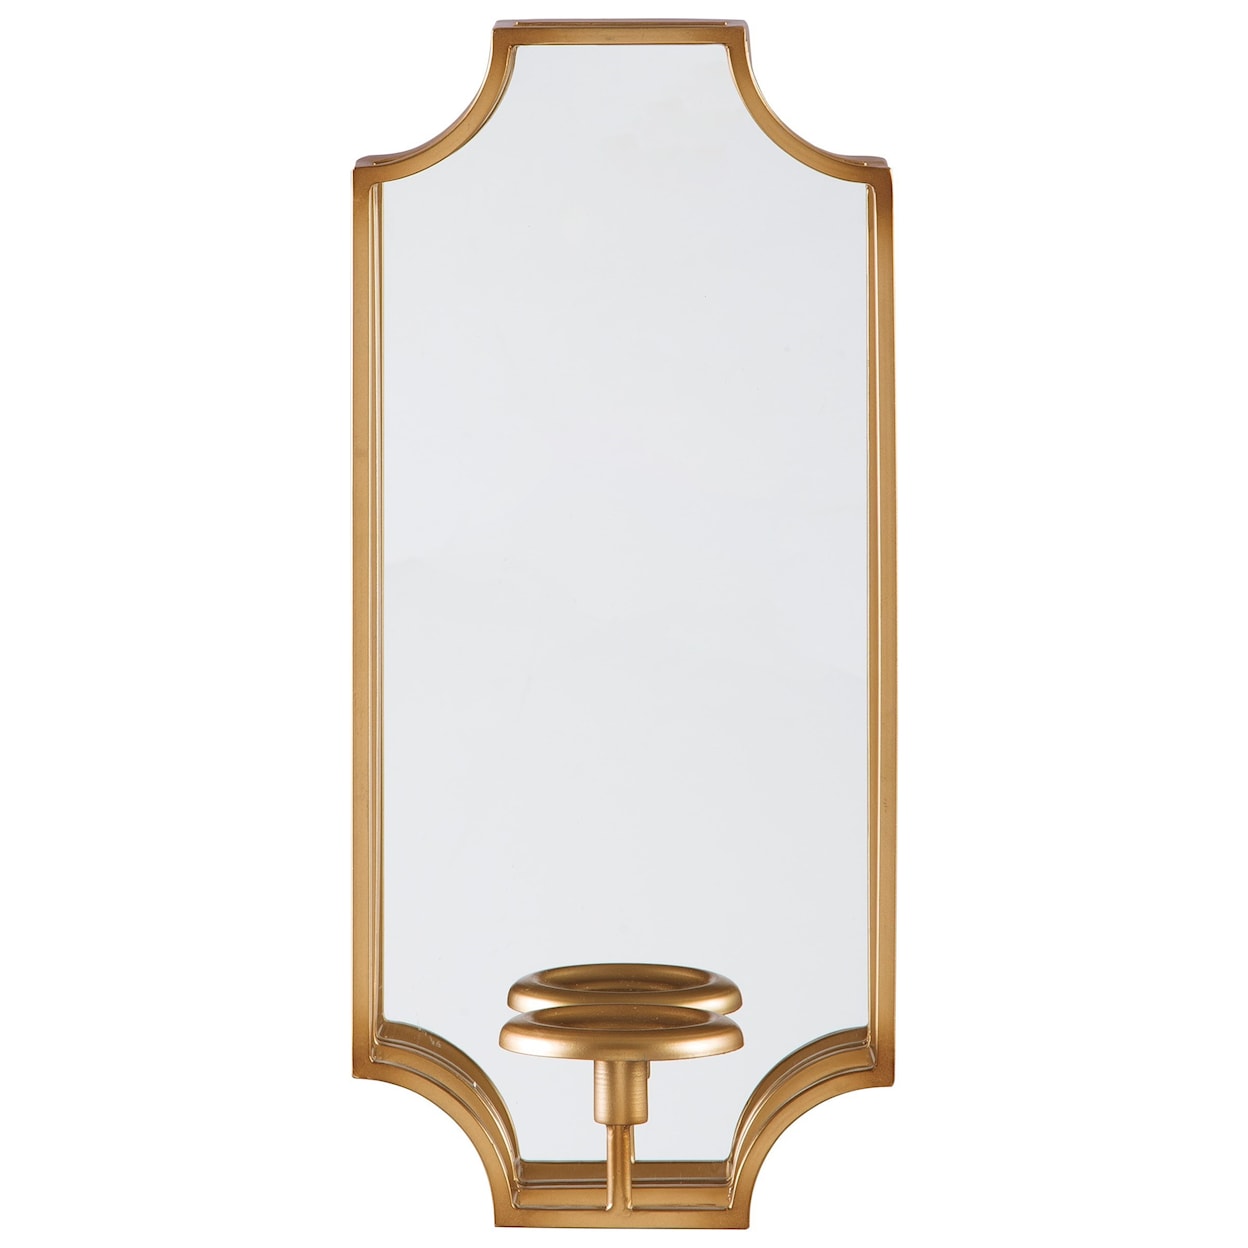 Signature Design Accent Mirrors Dumi Gold Finish Wall Sconce